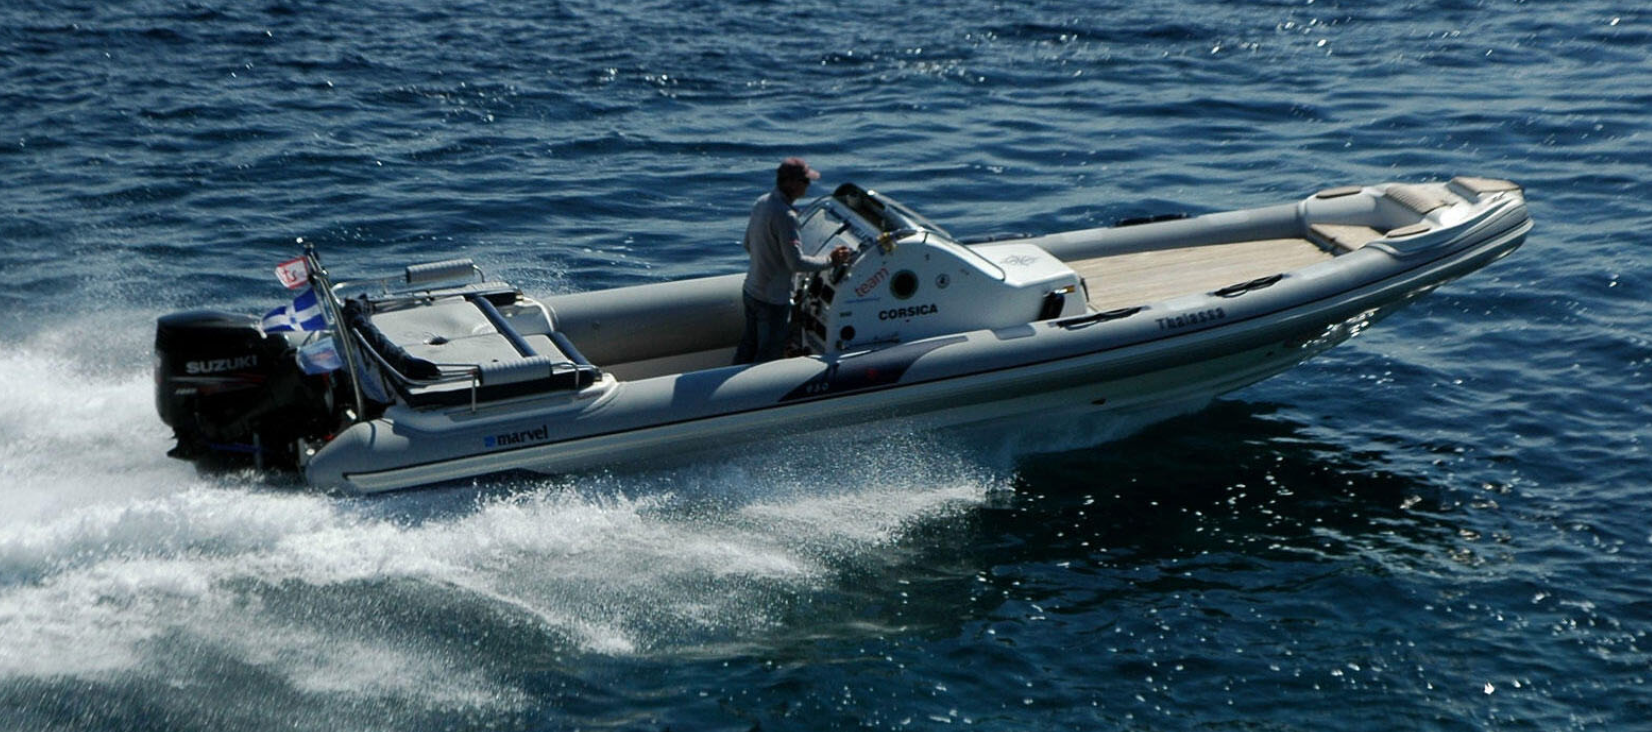 Rigid Hull Inflatable Boat, RIB, Suzuki outboards